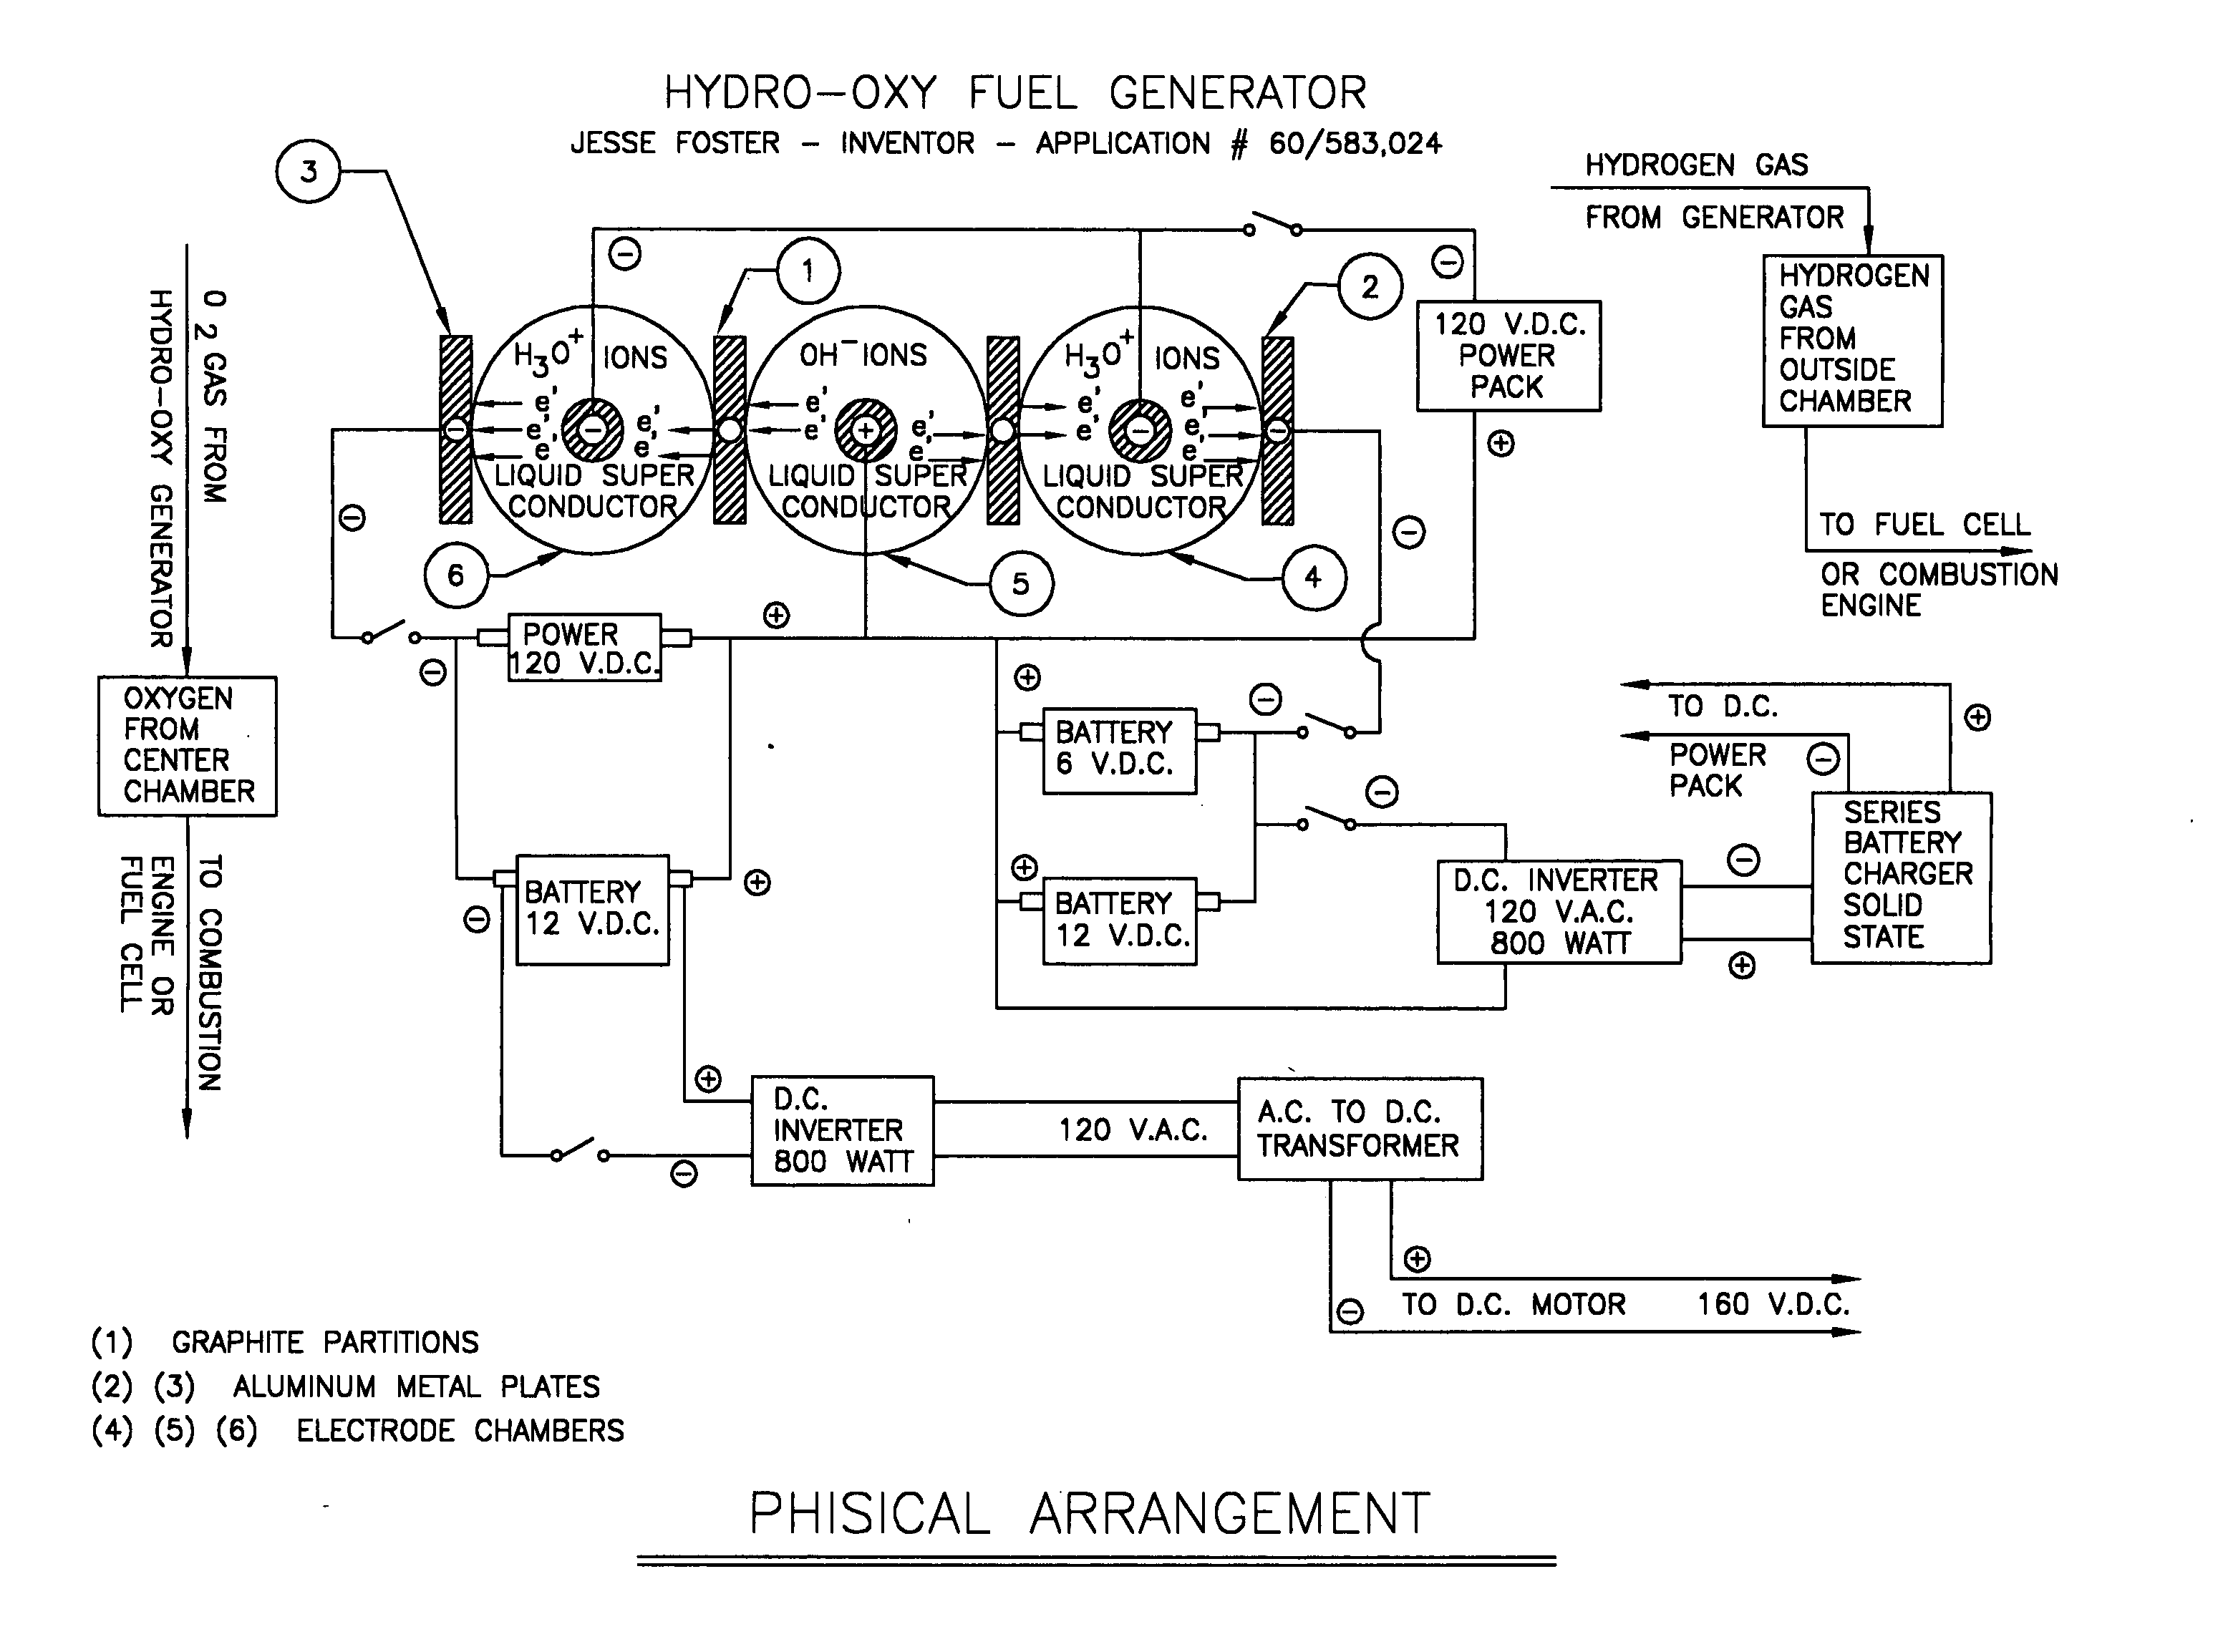 Hydro-Oxy fuel generator